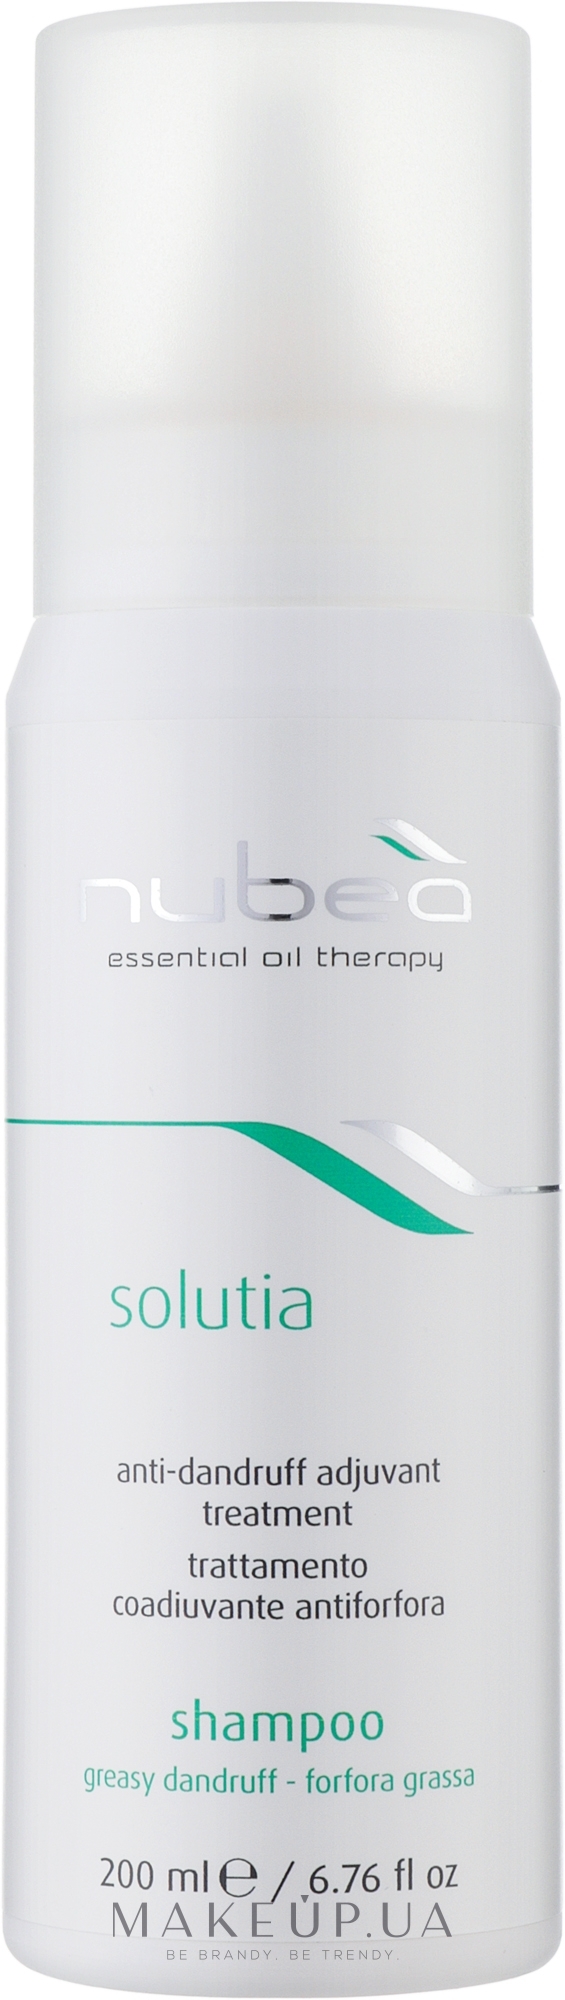 Шампунь для волос против жирной перхоти - Nubea Solutia Shampoo Greasy Dandruff — фото 200ml